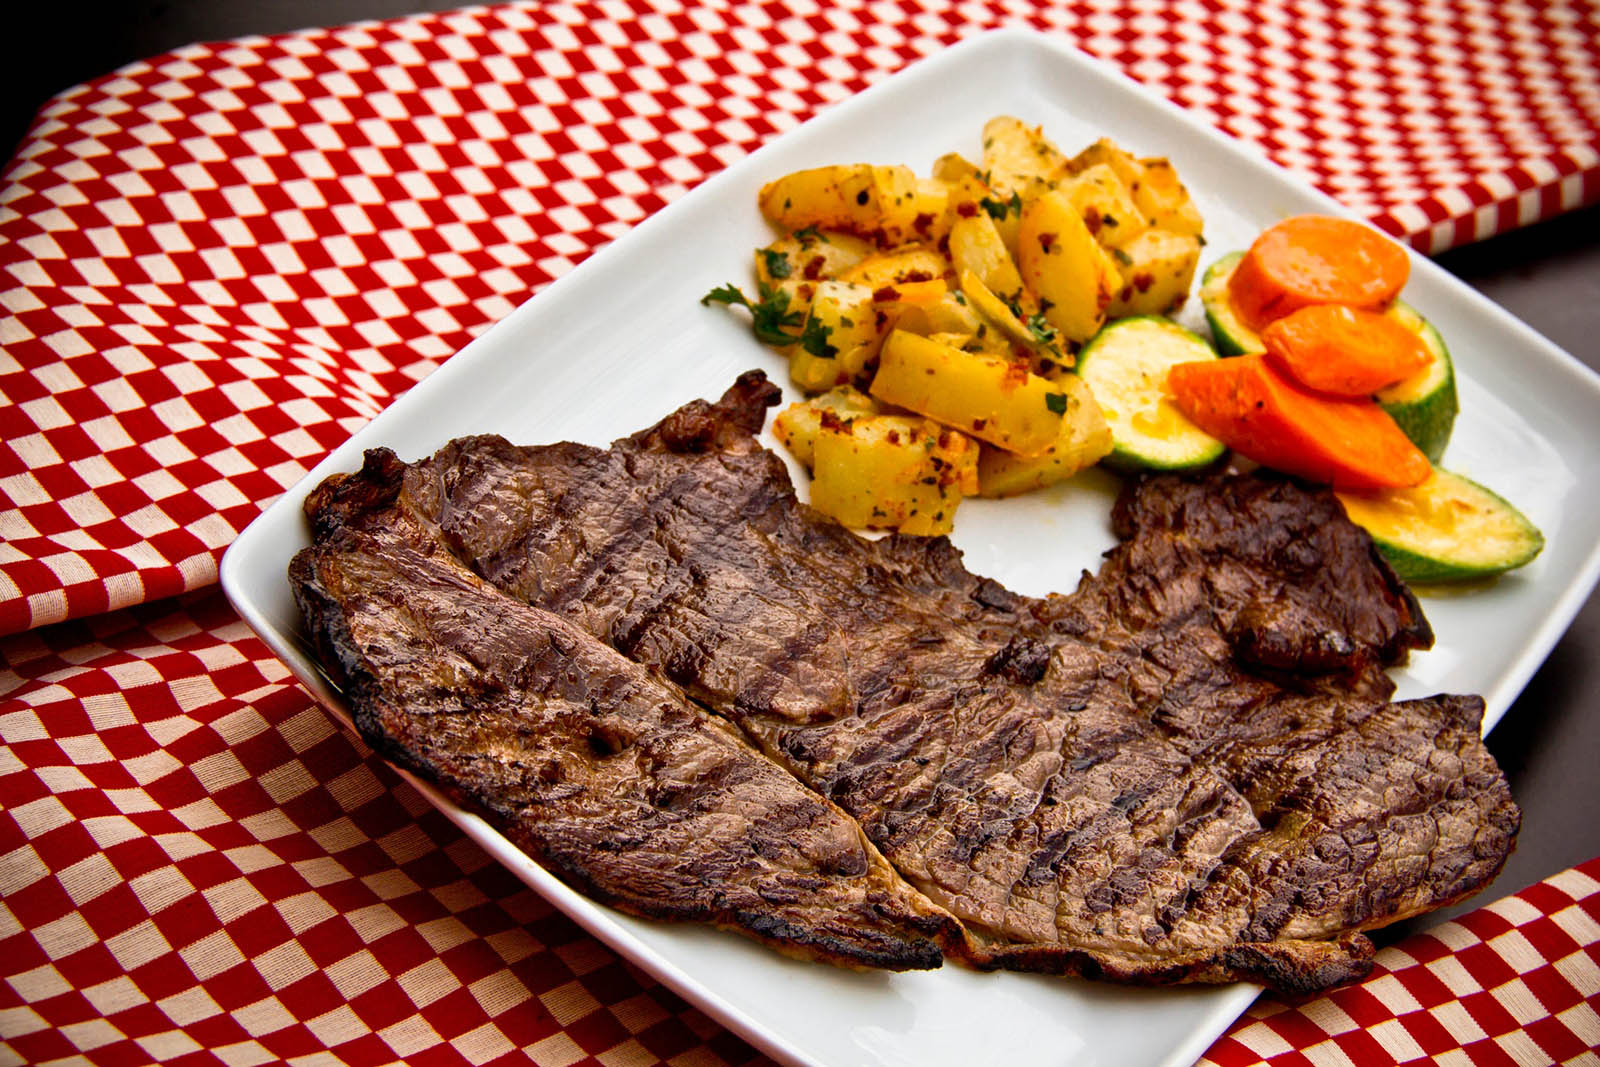 Restaurant Steak